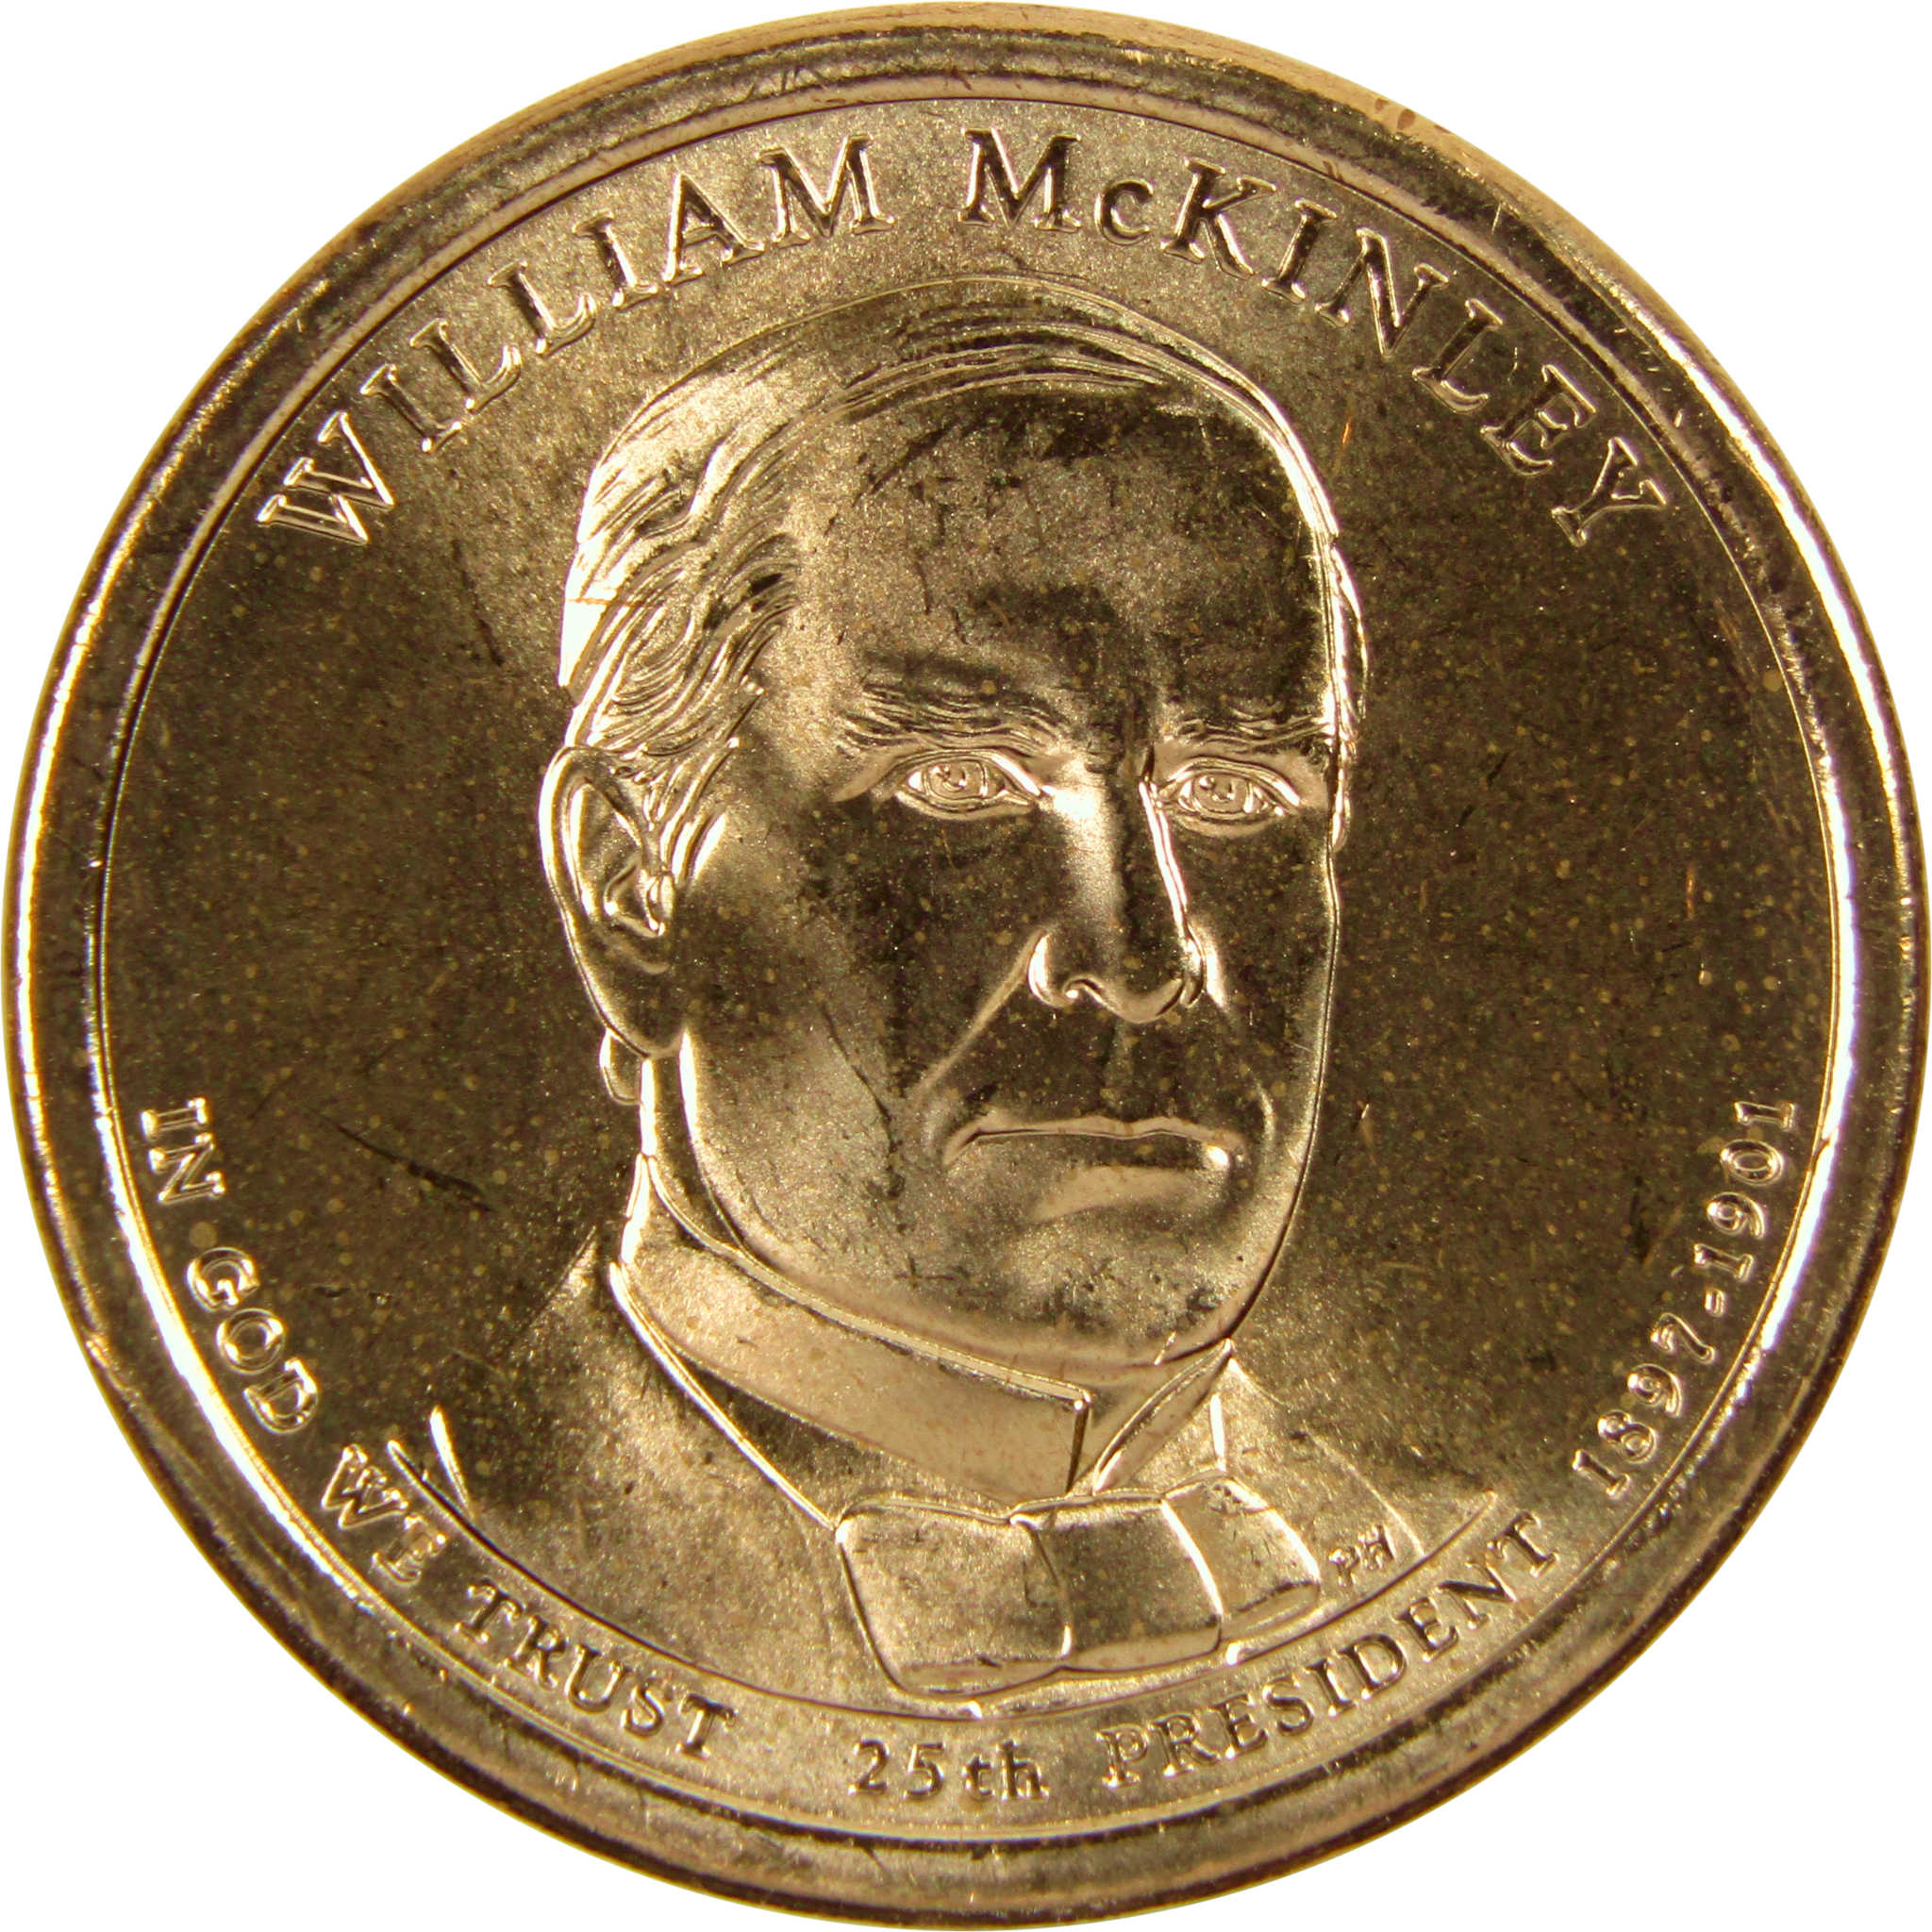 2013 D William McKinley Presidential Dollar BU Uncirculated $1 Coin